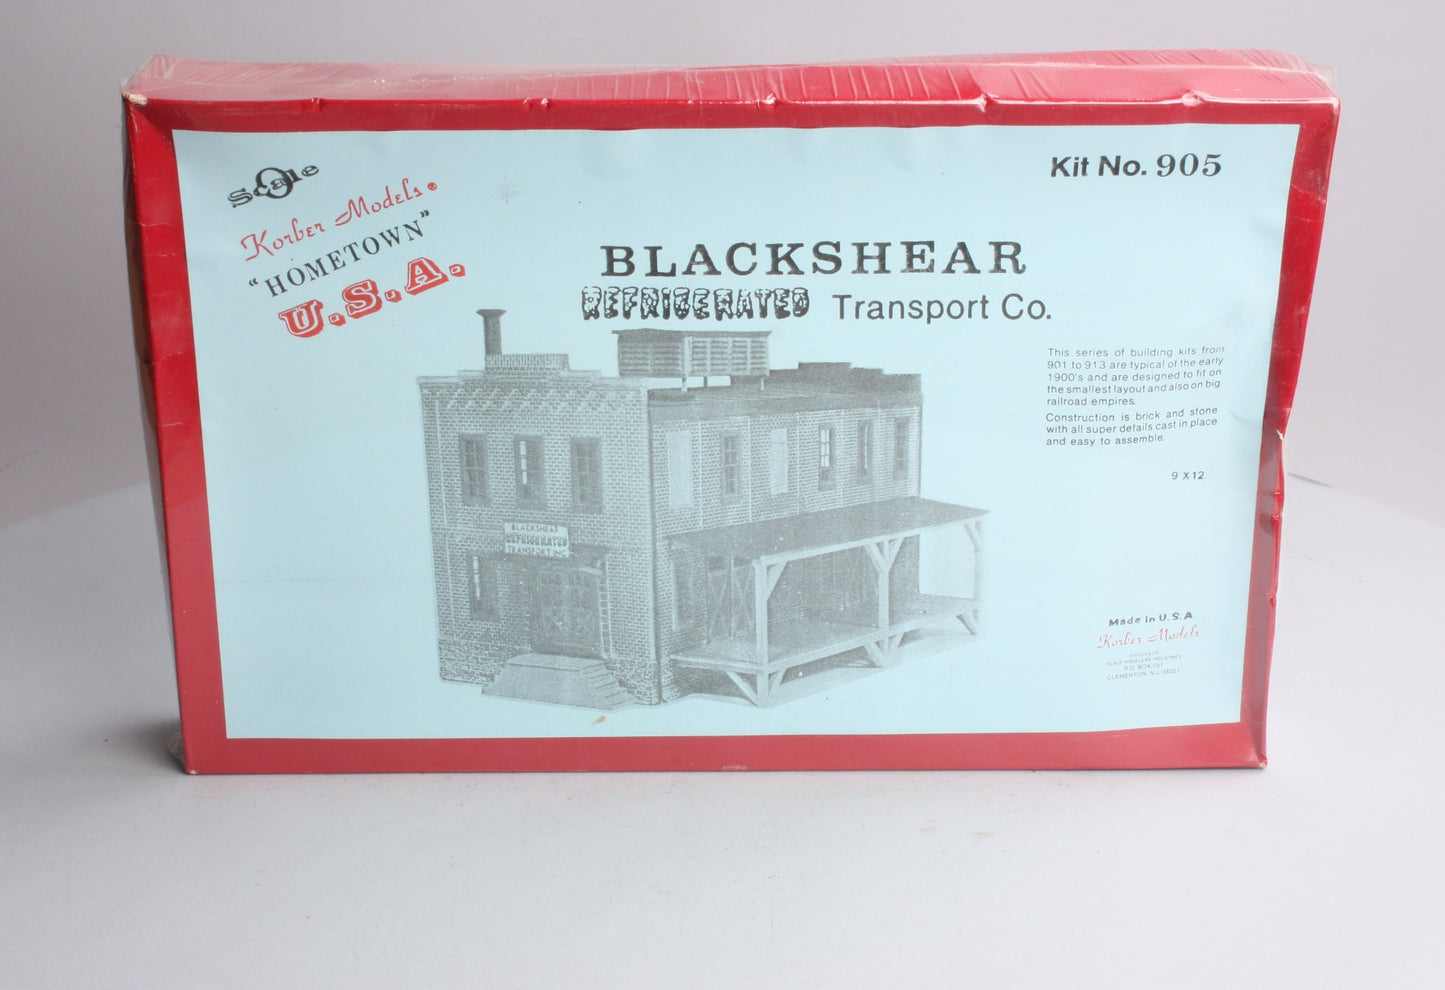 Korber 905 Blackshear Refrigerated Transport Co. Building Kit